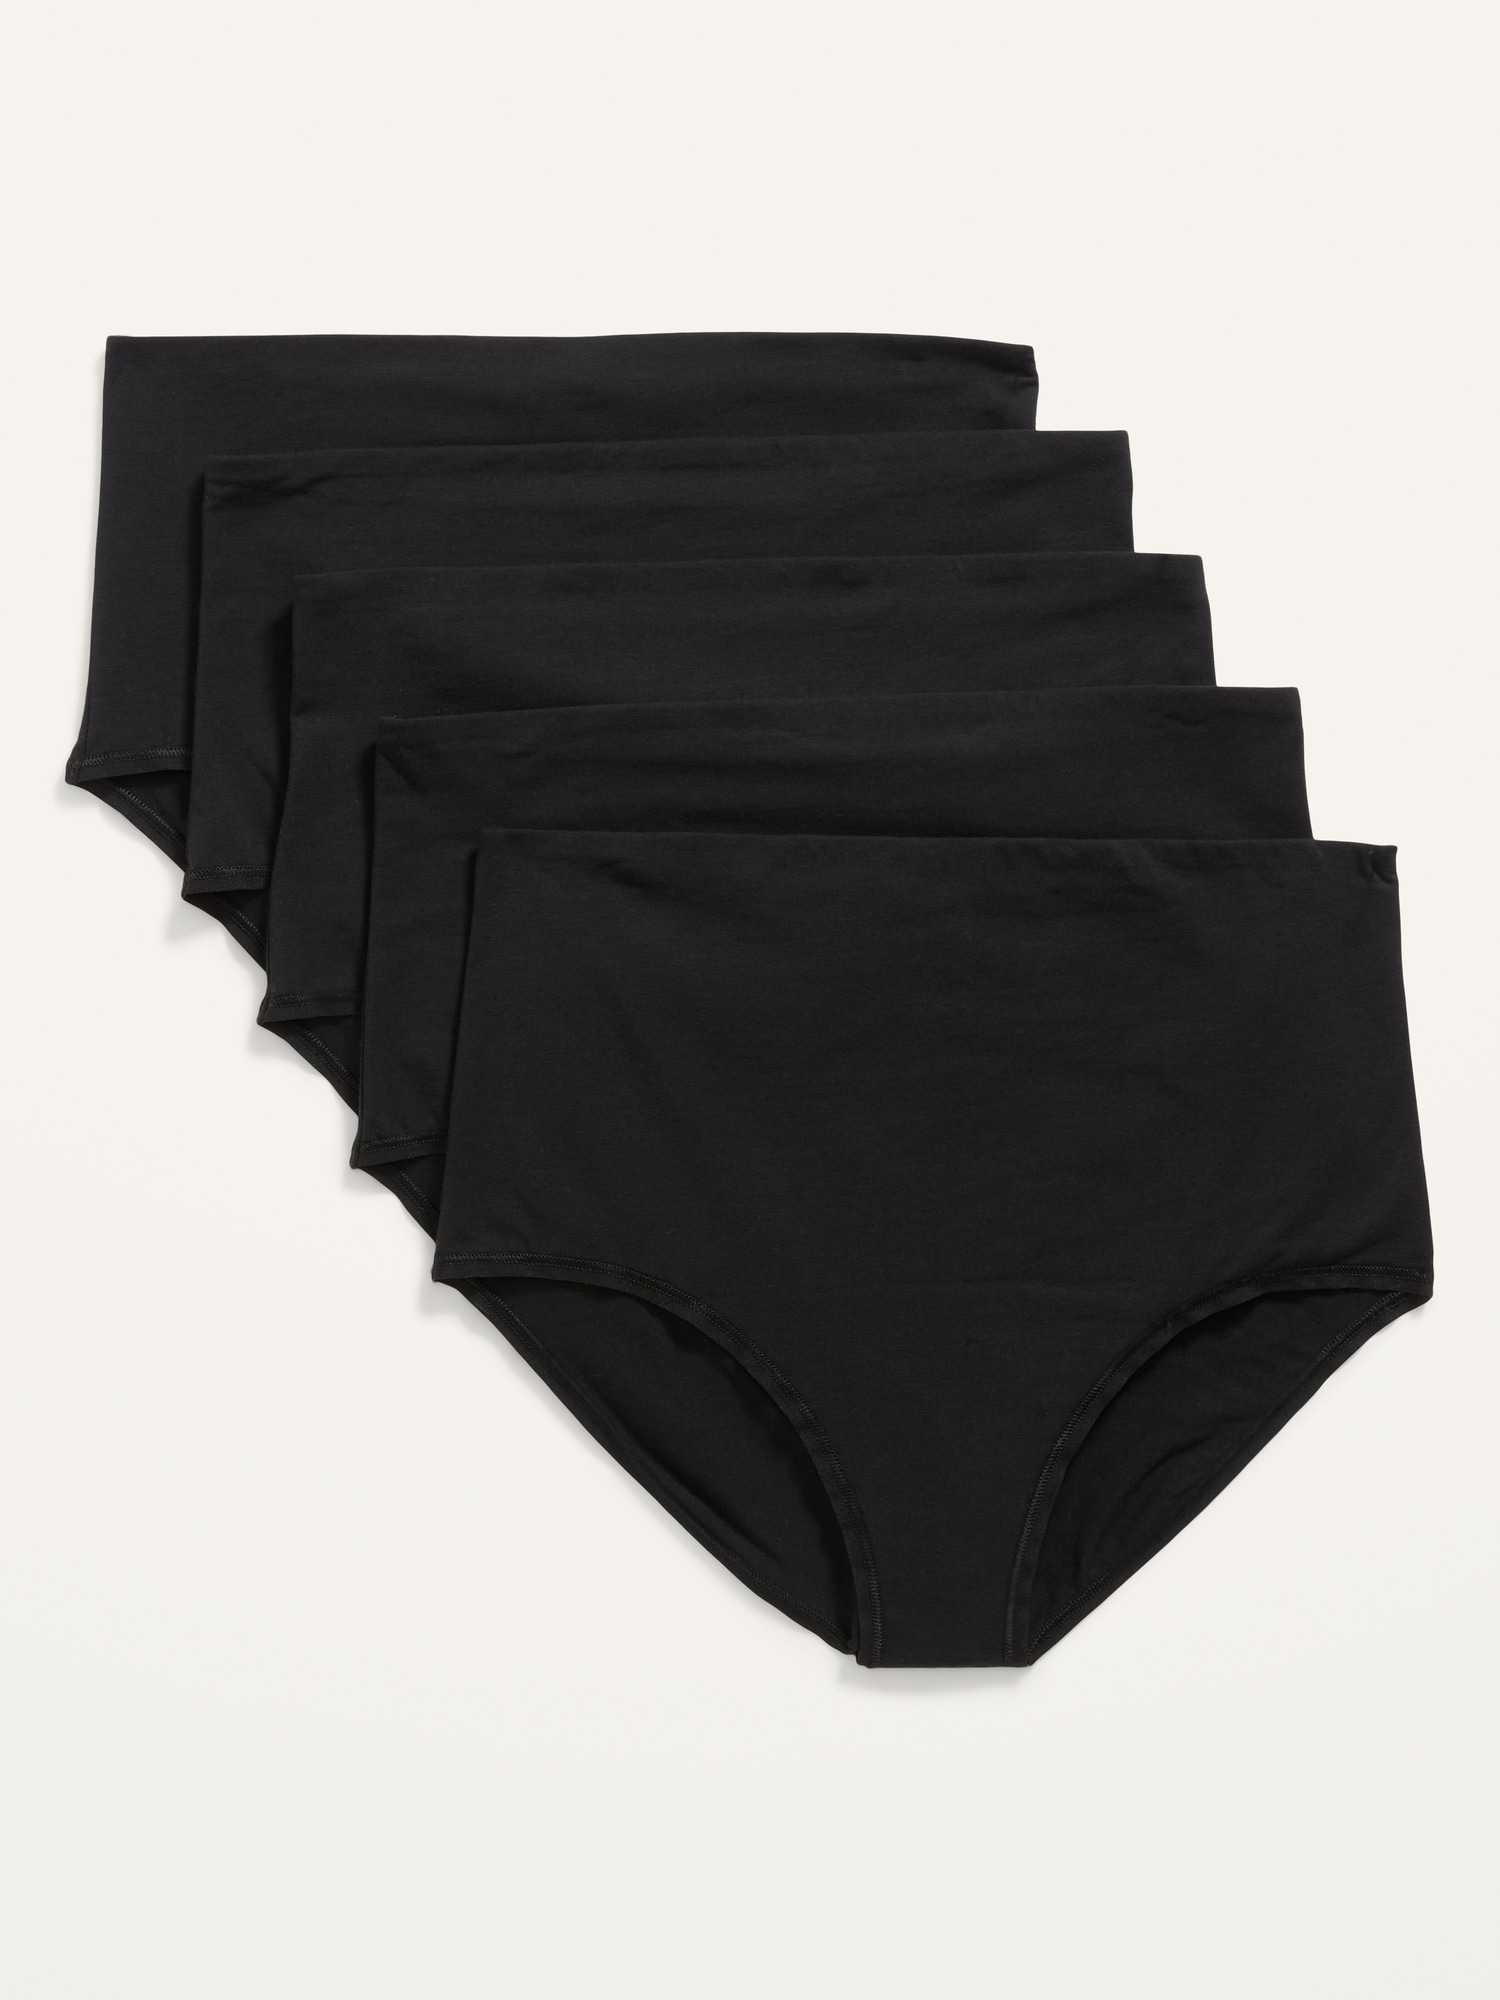 Spdoo Women's Cotton Over the Bump Maternity Panties Pregnancy Underwear  Regular & Plus Size M-5XL 